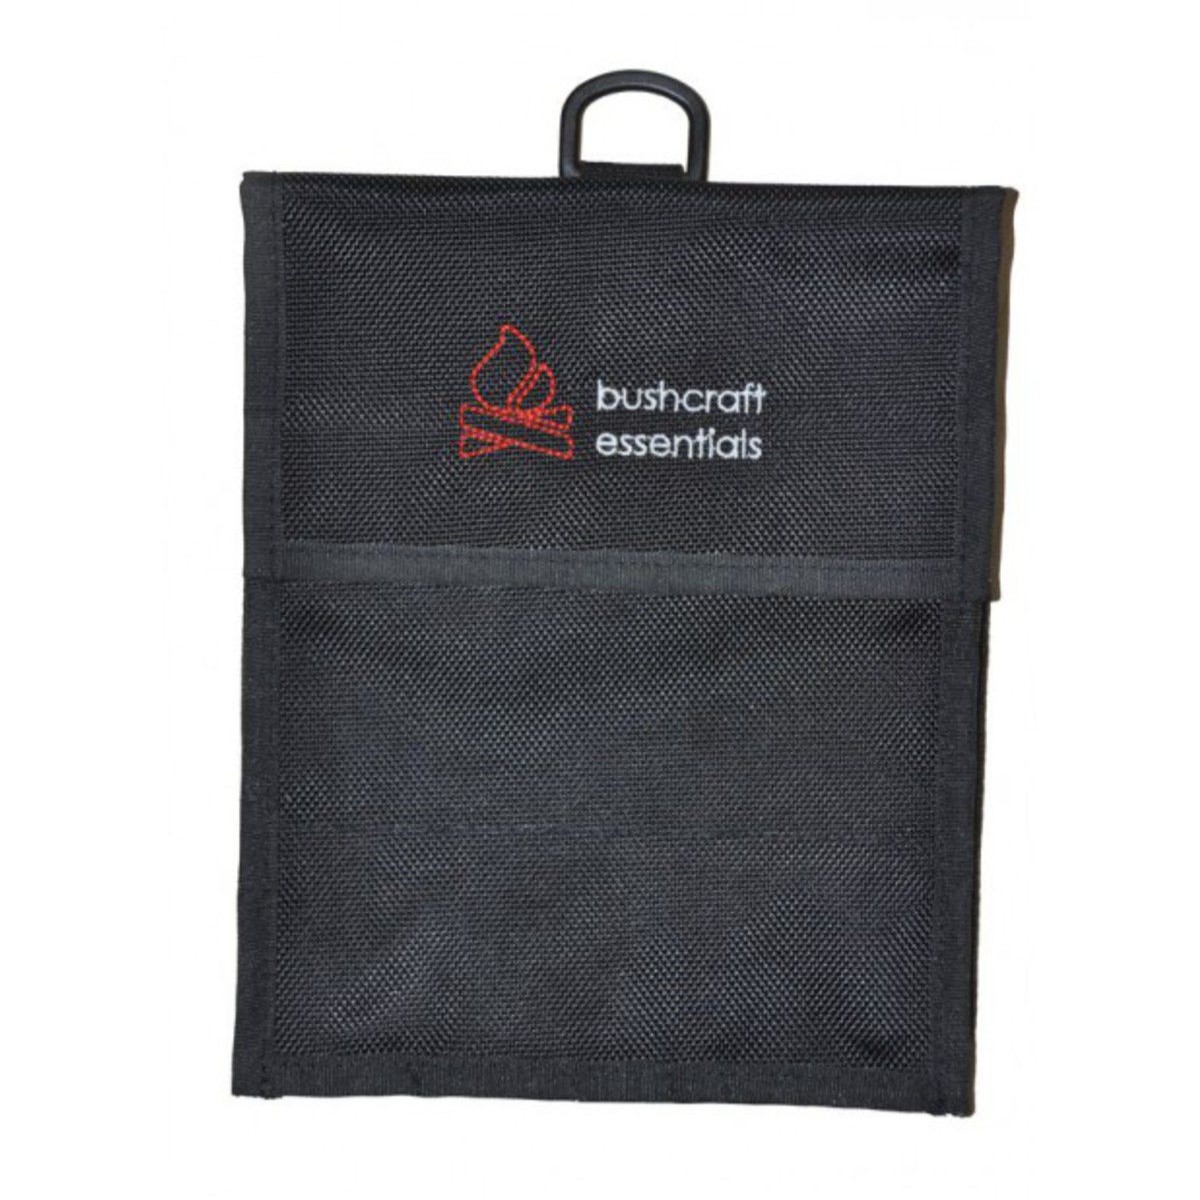 Bushcraft Essentials Heavy duty outdoor bag XL